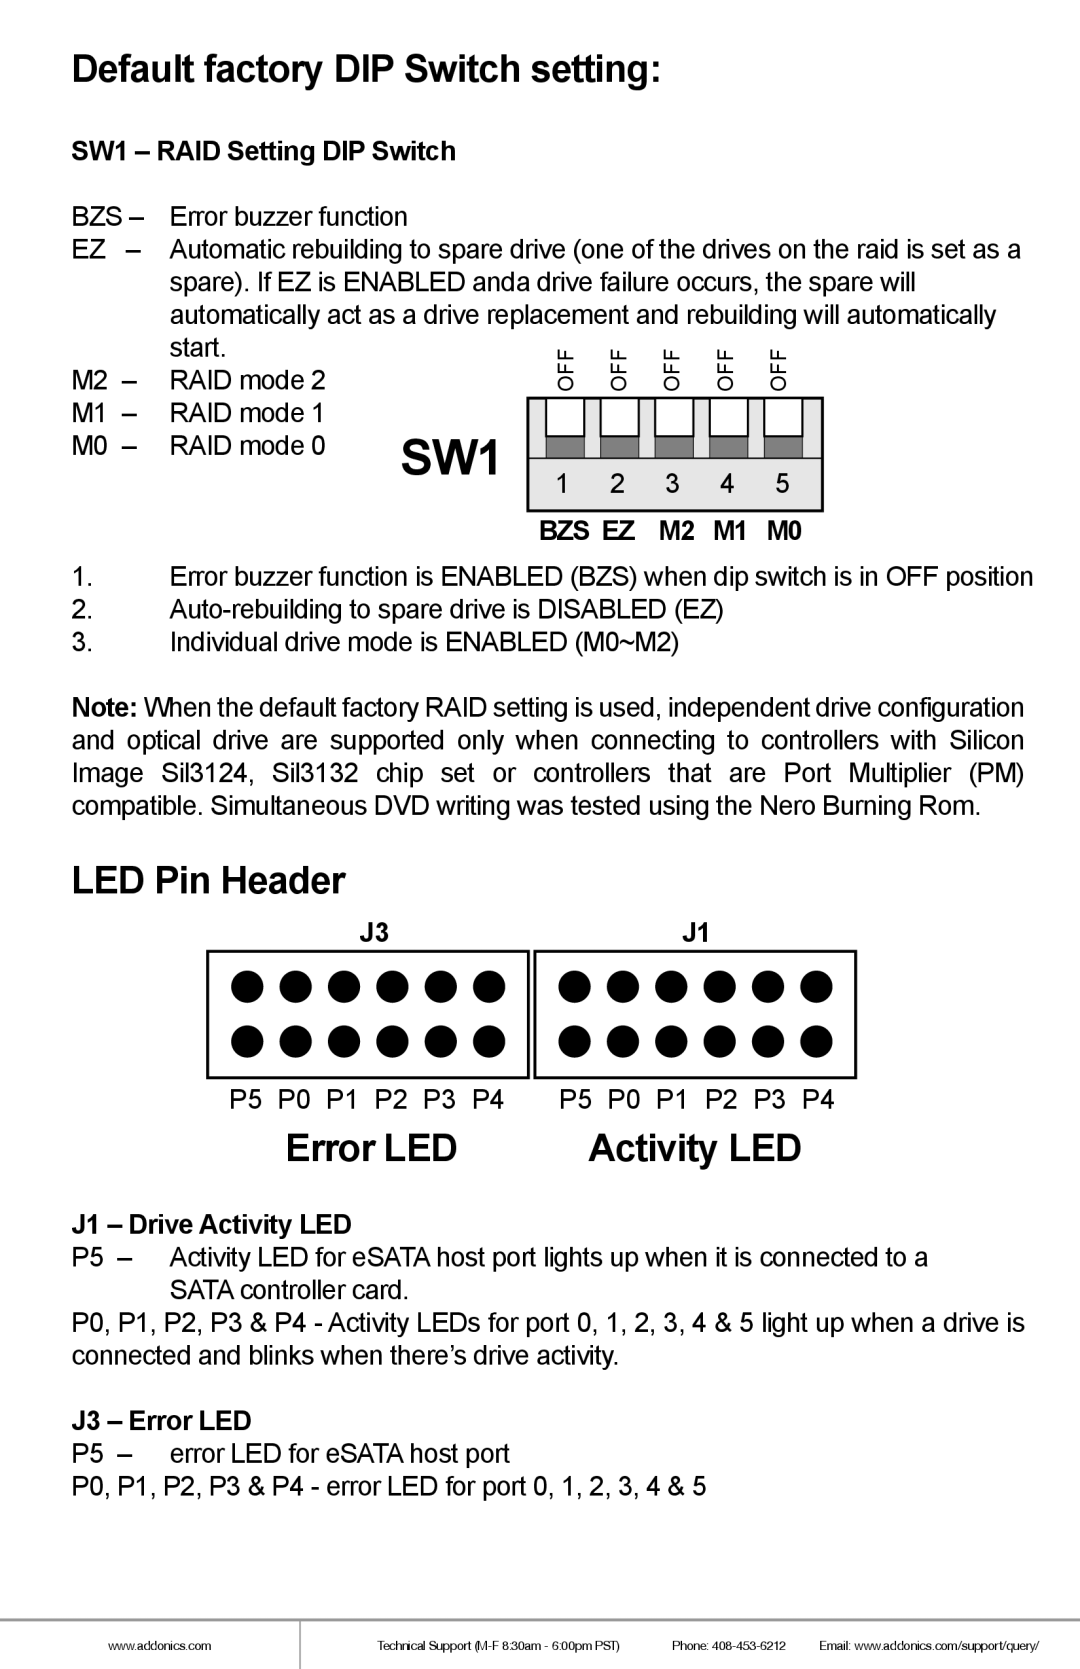 Addonics Technologies RT93DAHXML manual Default factory DIP Switch setting, LED Pin Header, Error LED, Activity LED, J3J1 